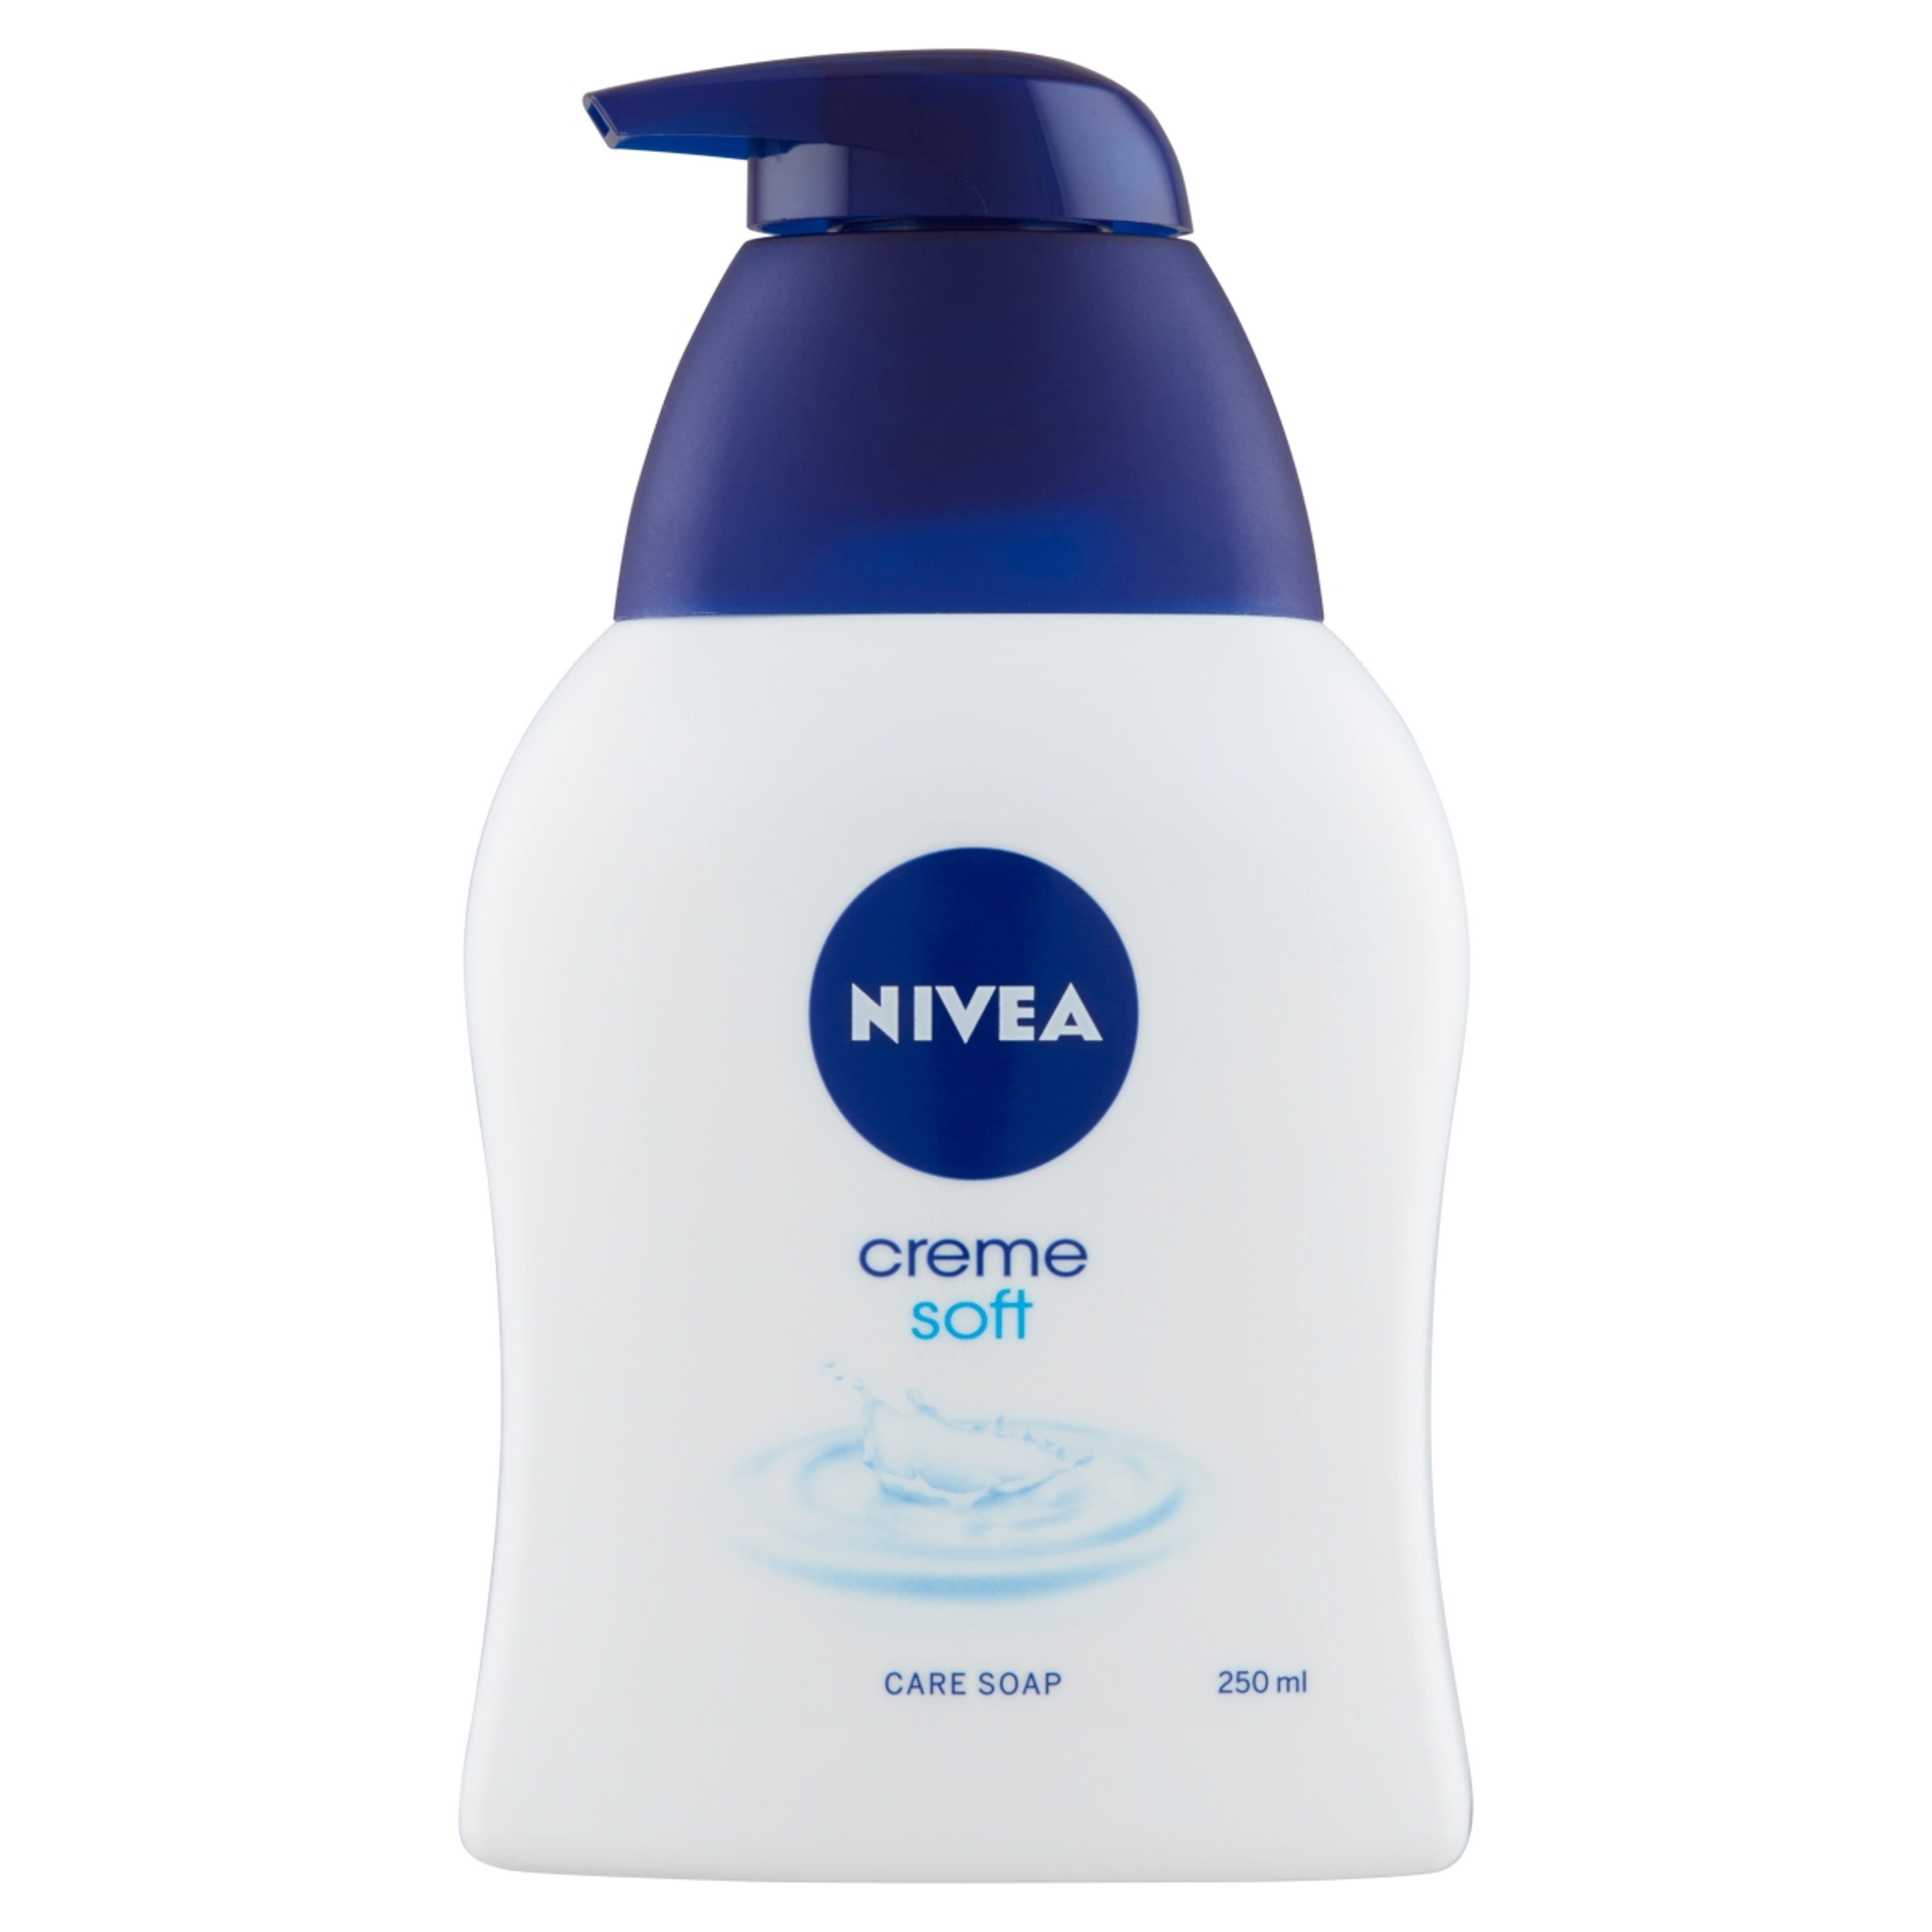 NIVEA Creme Soft Folyékony Krémszappan2 - 50 ml-1